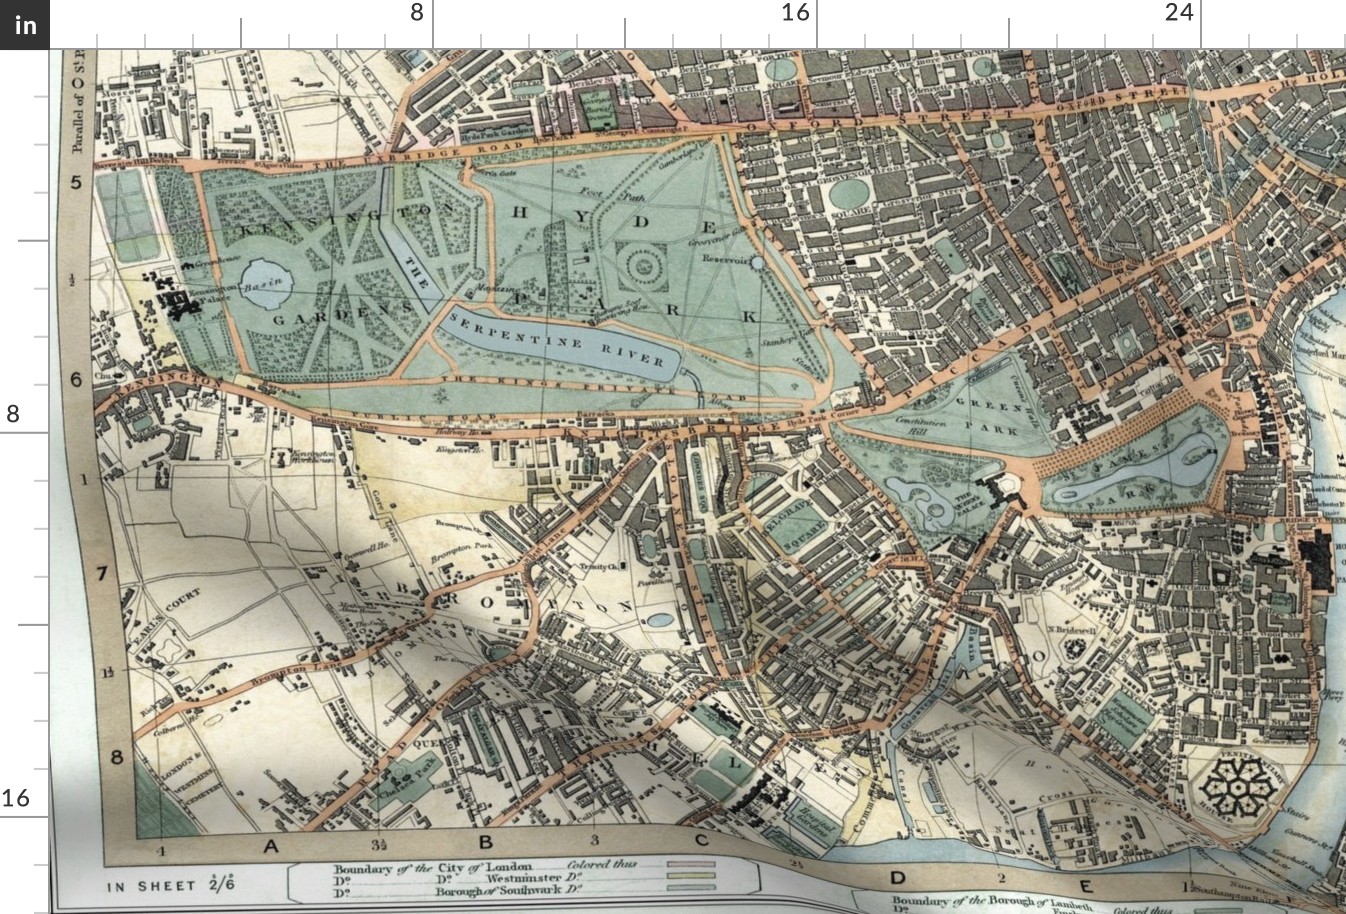 CROSS'S LONDON GUIDE  - VICTORIAN CITY STREET MAP